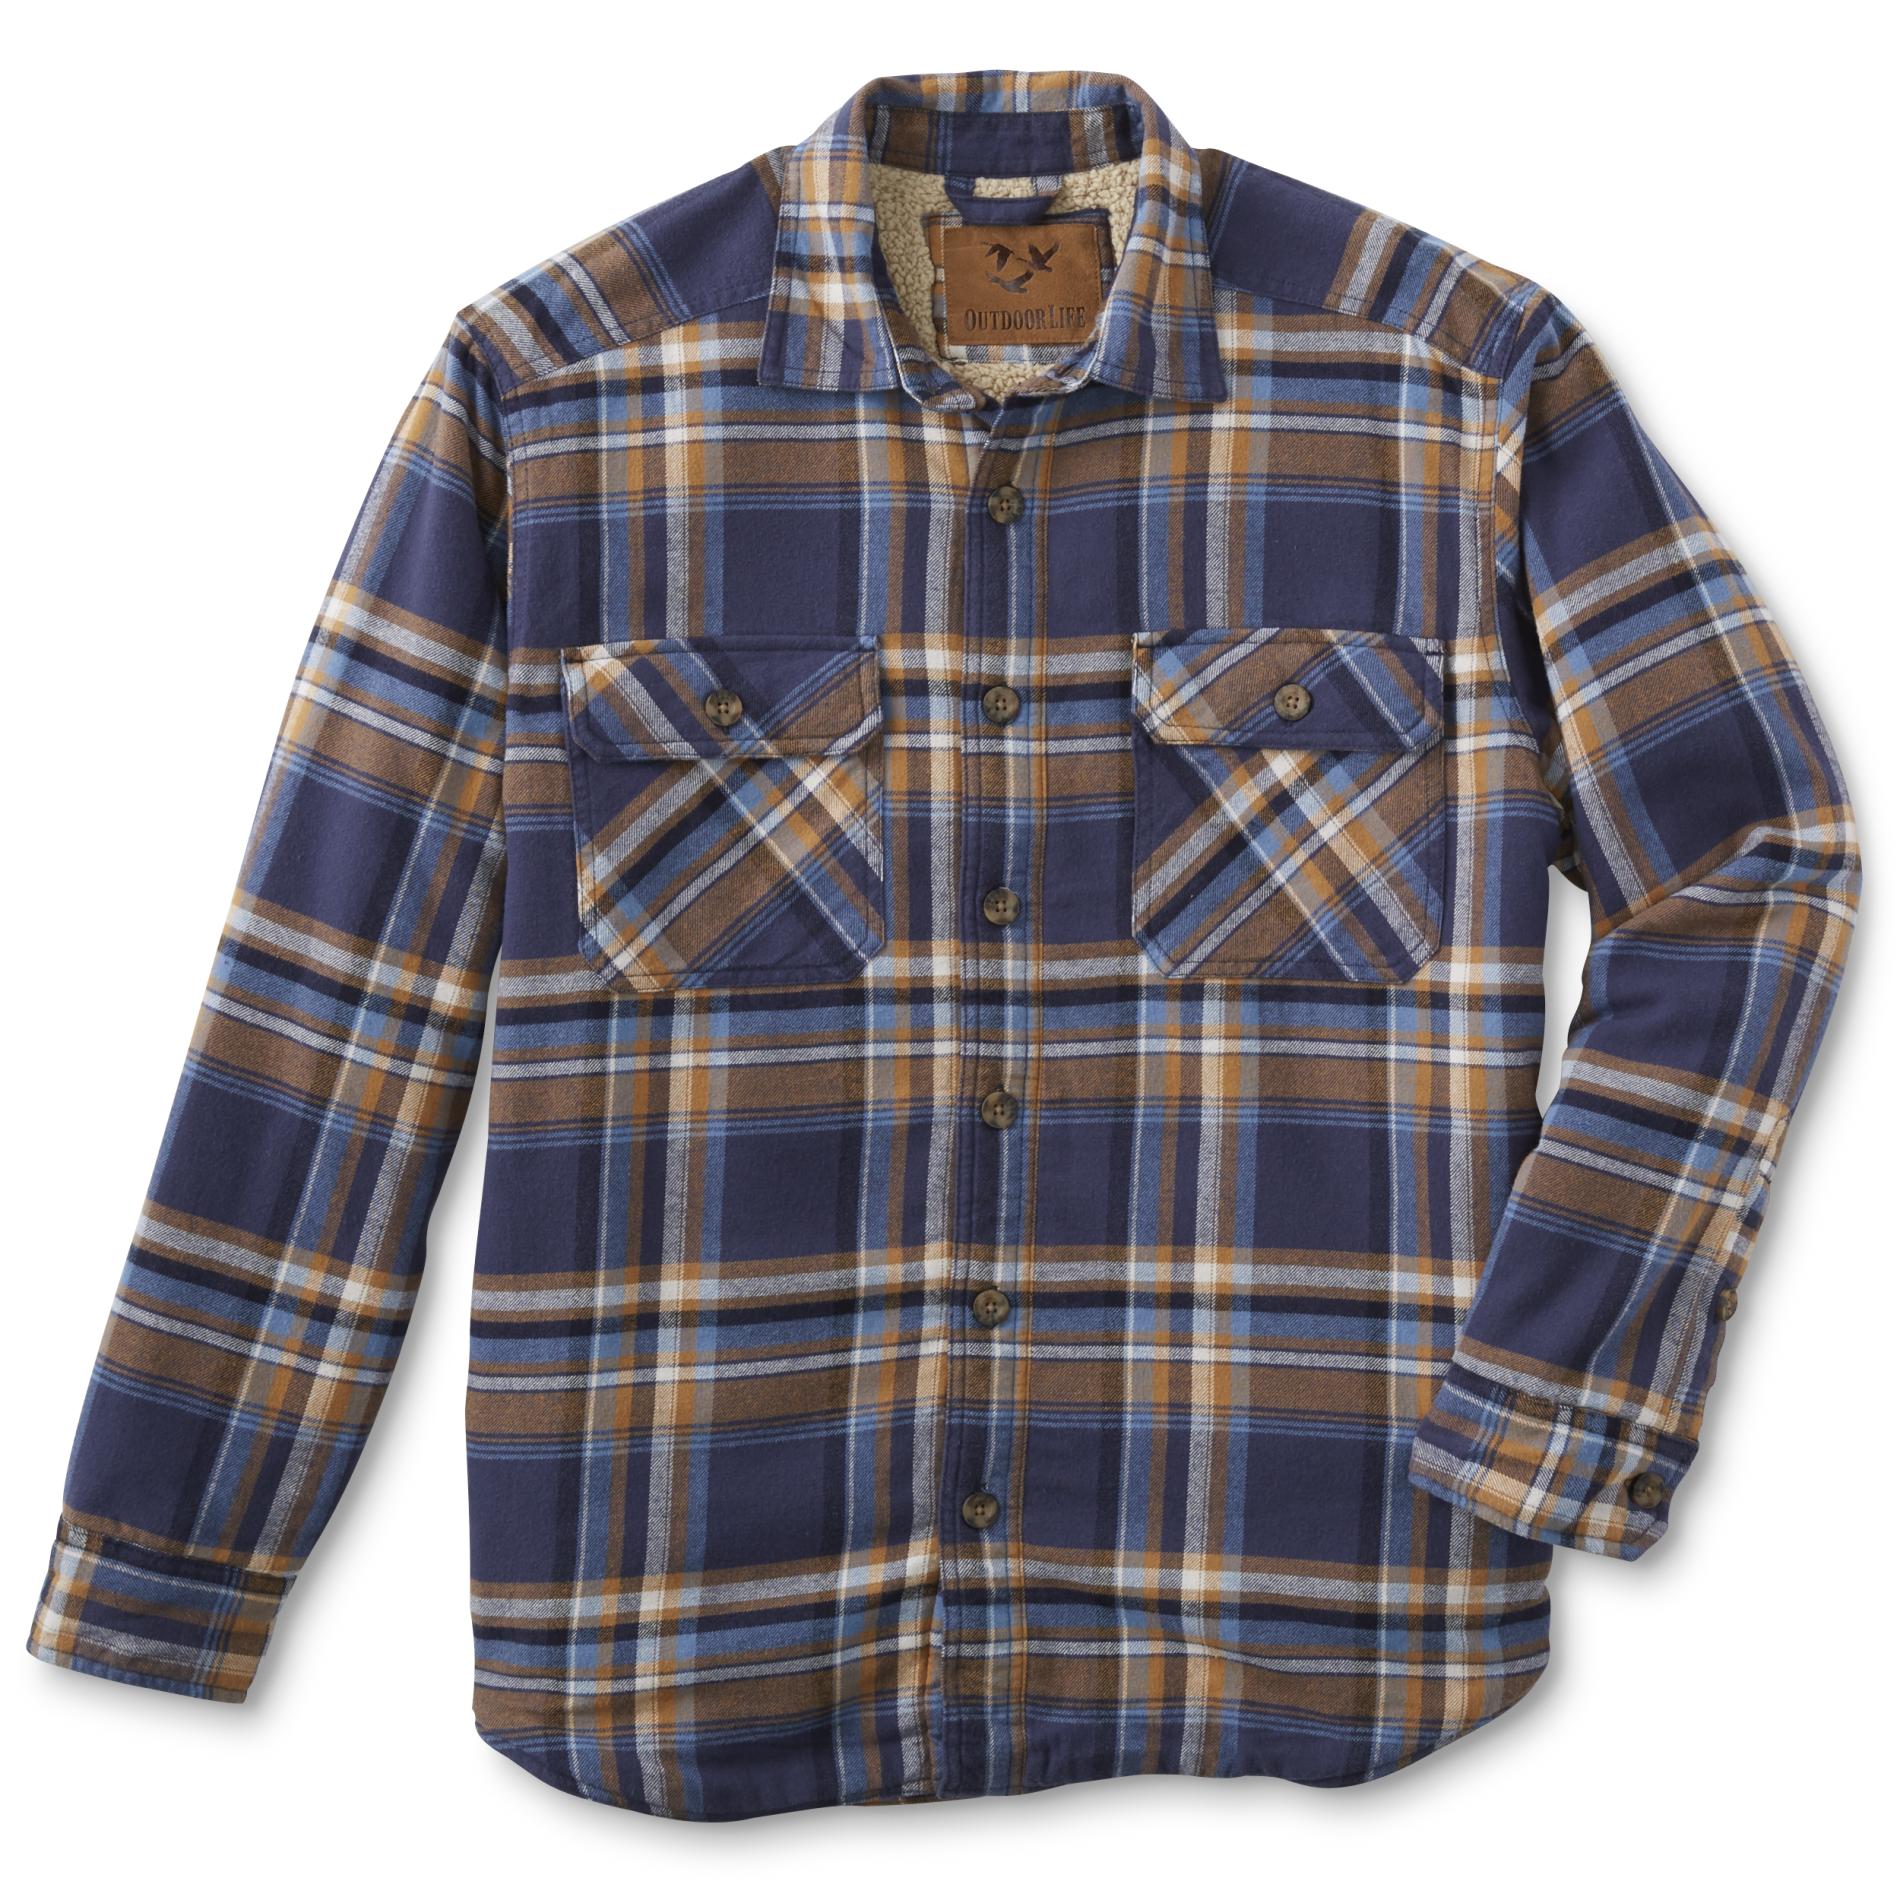 Outdoor Life Men's Flannel Shirt Jacket - Plaid | Shop Your Way: Online ...